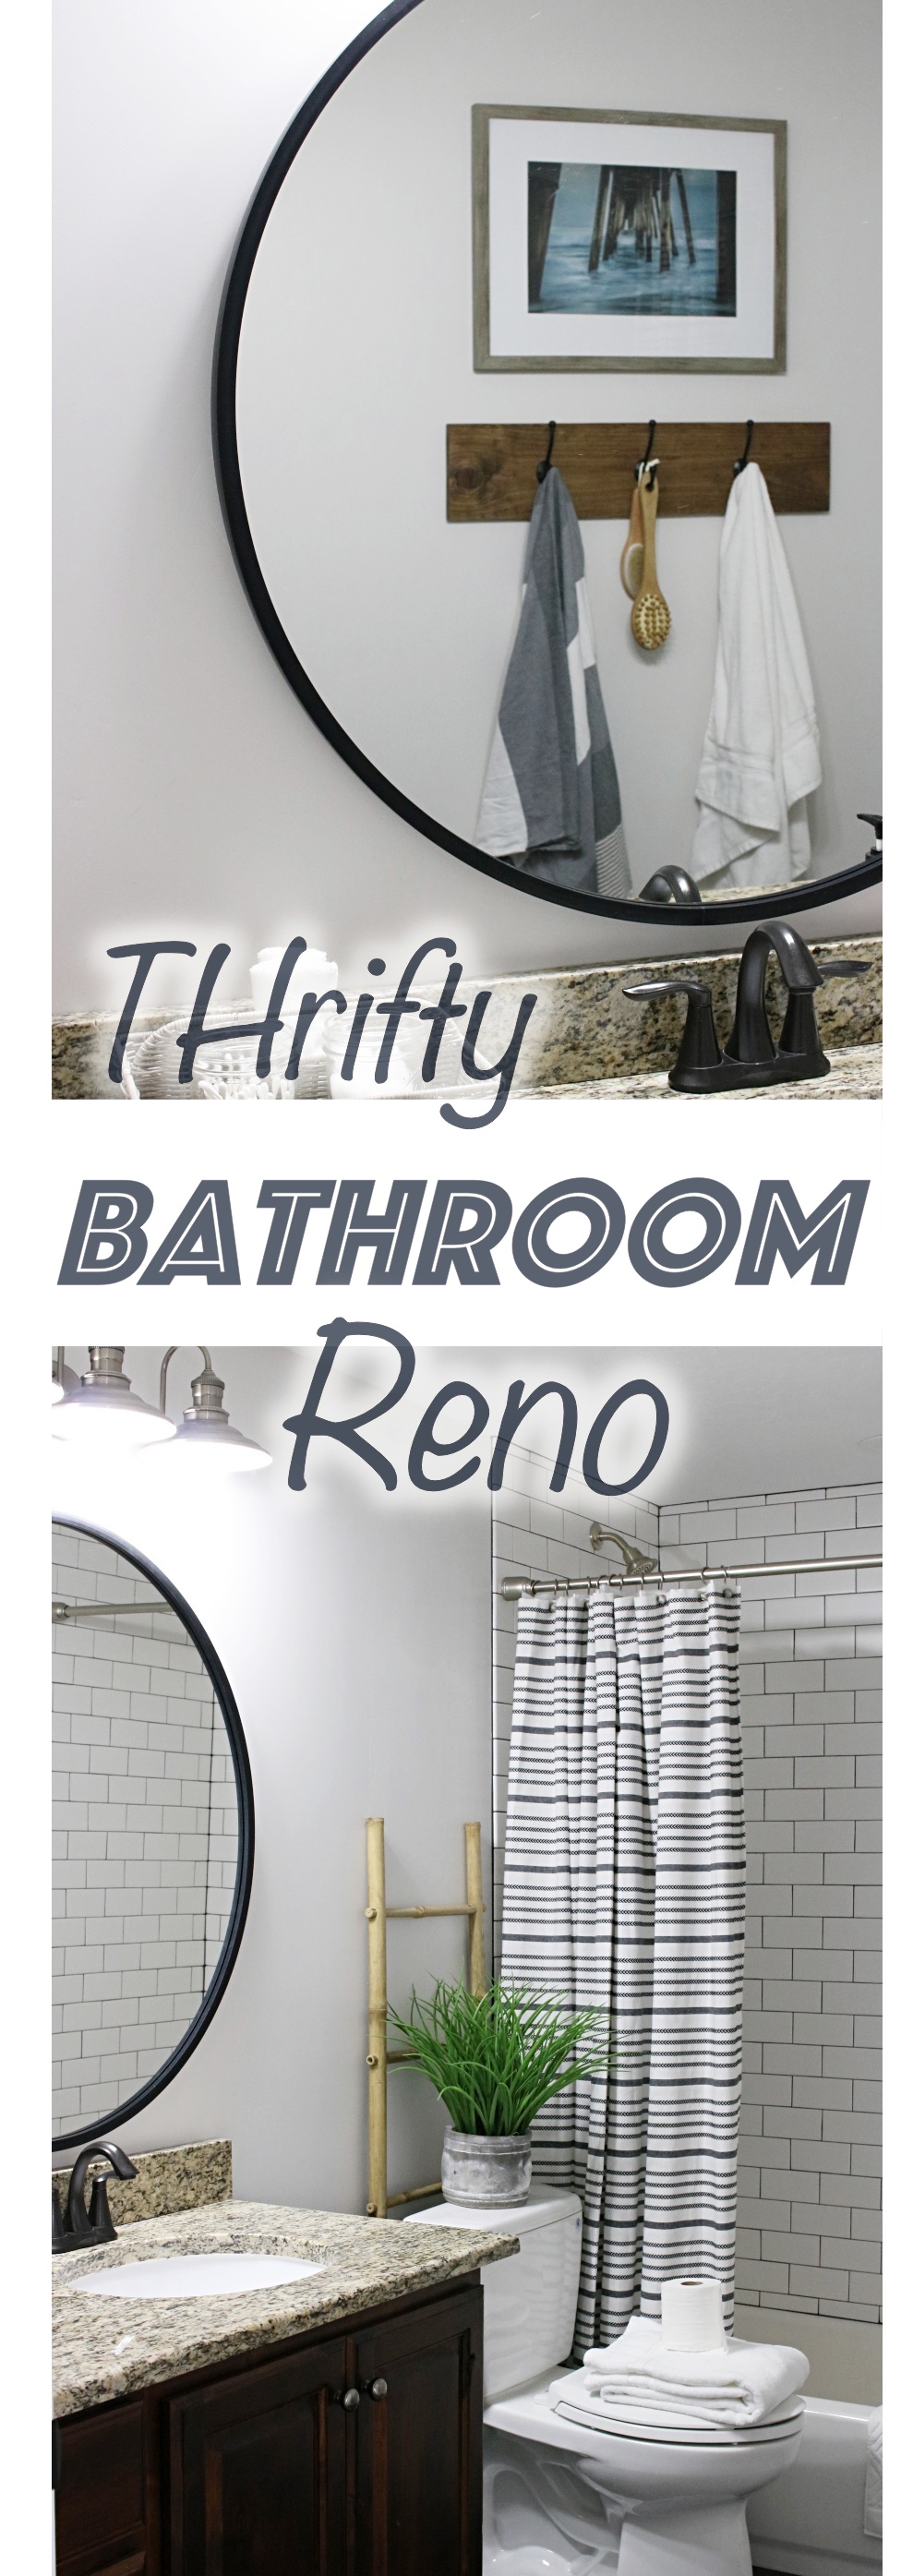 Thrifty bathroom renovation, bathroom decor, bathroom reno, subway tile, hex tile, black tile, budget friendly bathroom reveal